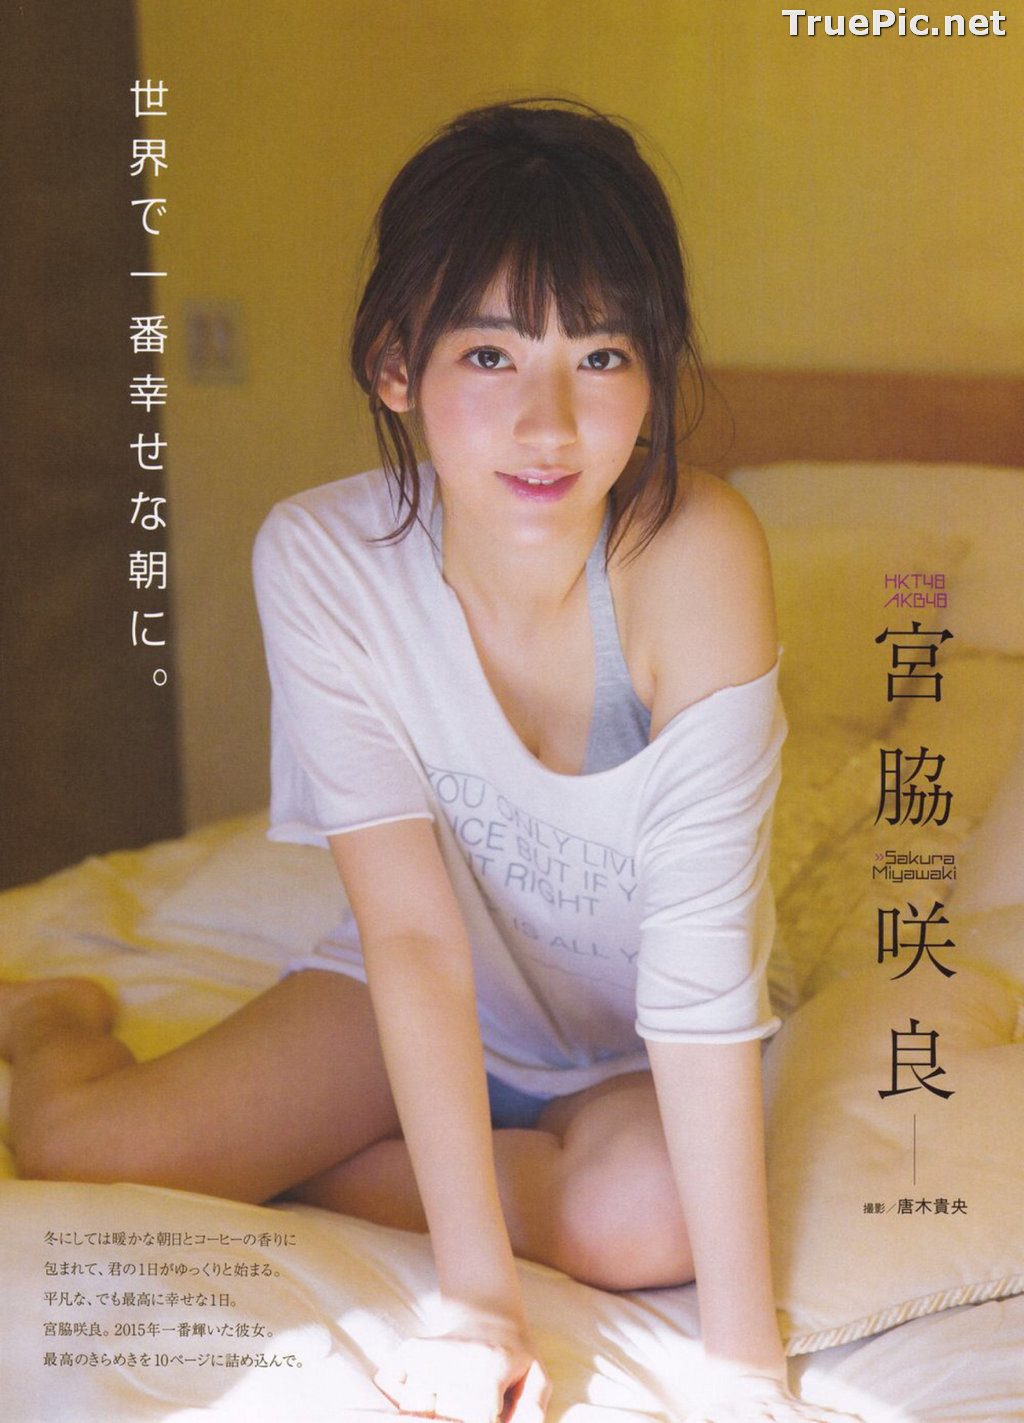 Image Japanese Singer and Actress - Sakura Miyawaki (宮脇咲良) - Sexy Picture Collection 2021 - TruePic.net - Picture-14